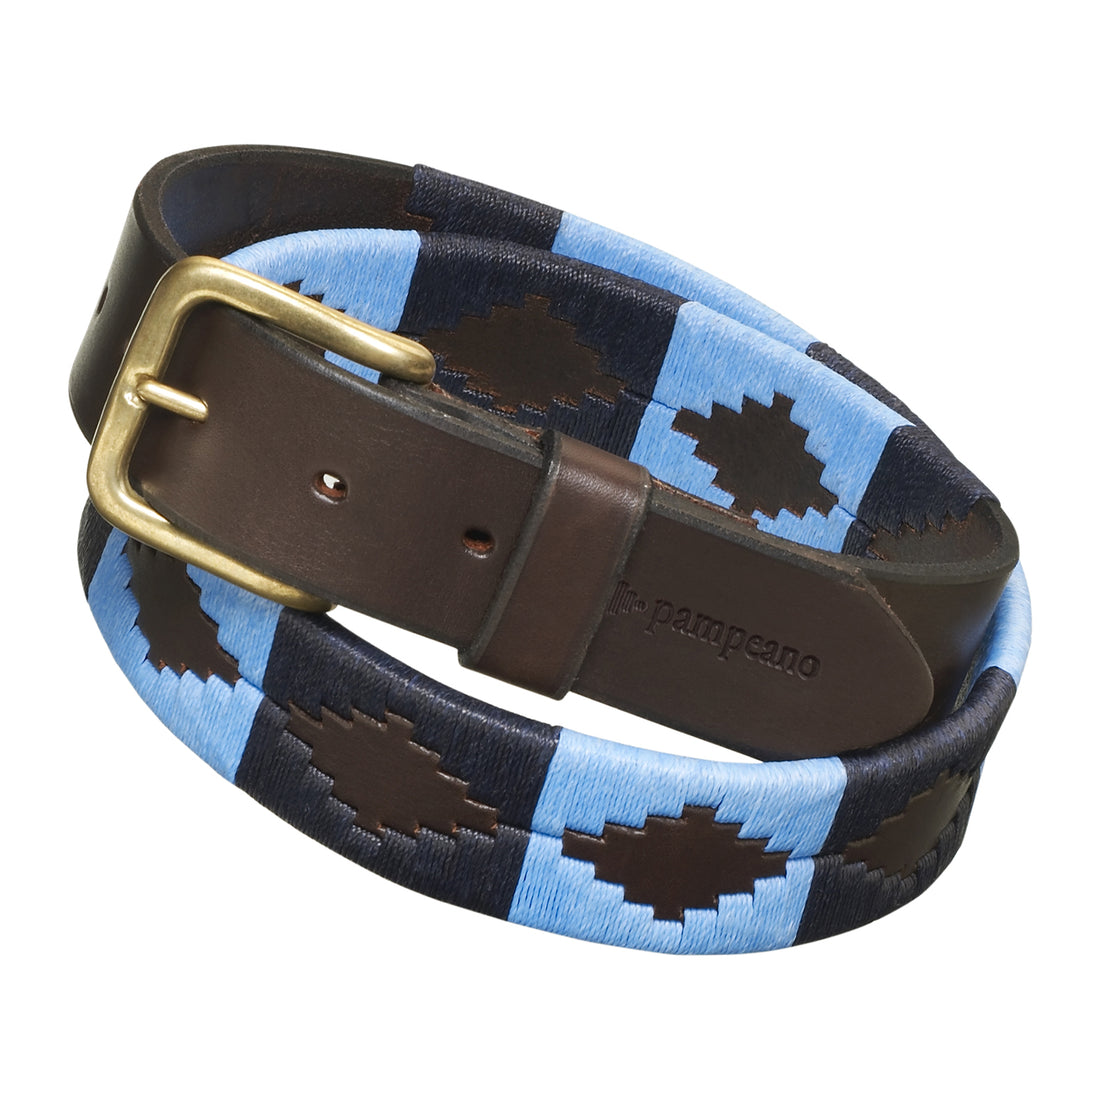 Pampeano-Azules-Polo-Belt